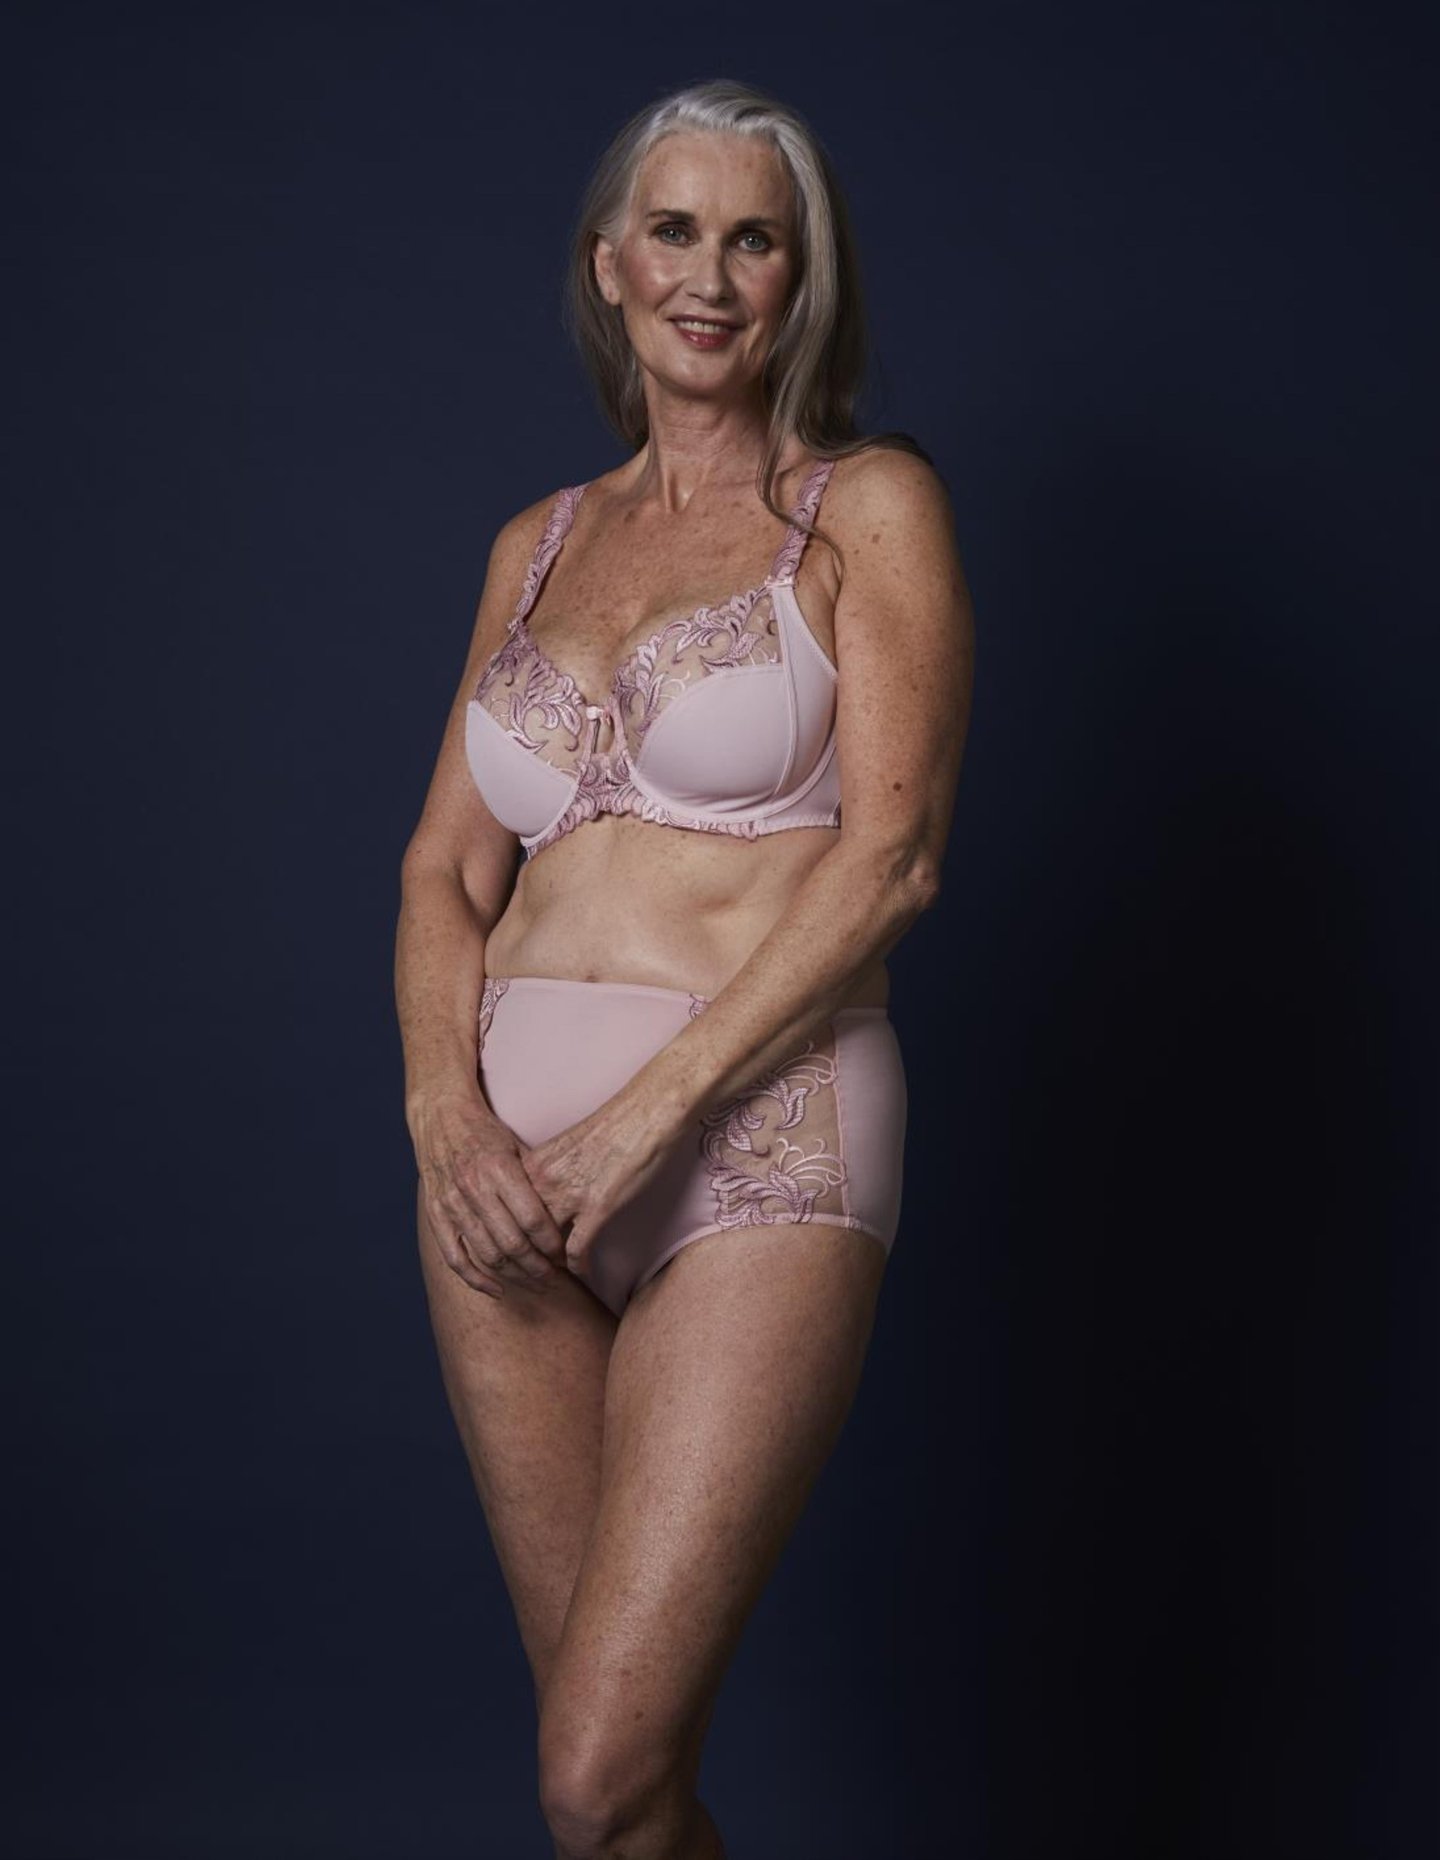 This granny turned lingerie model wants to make older women more